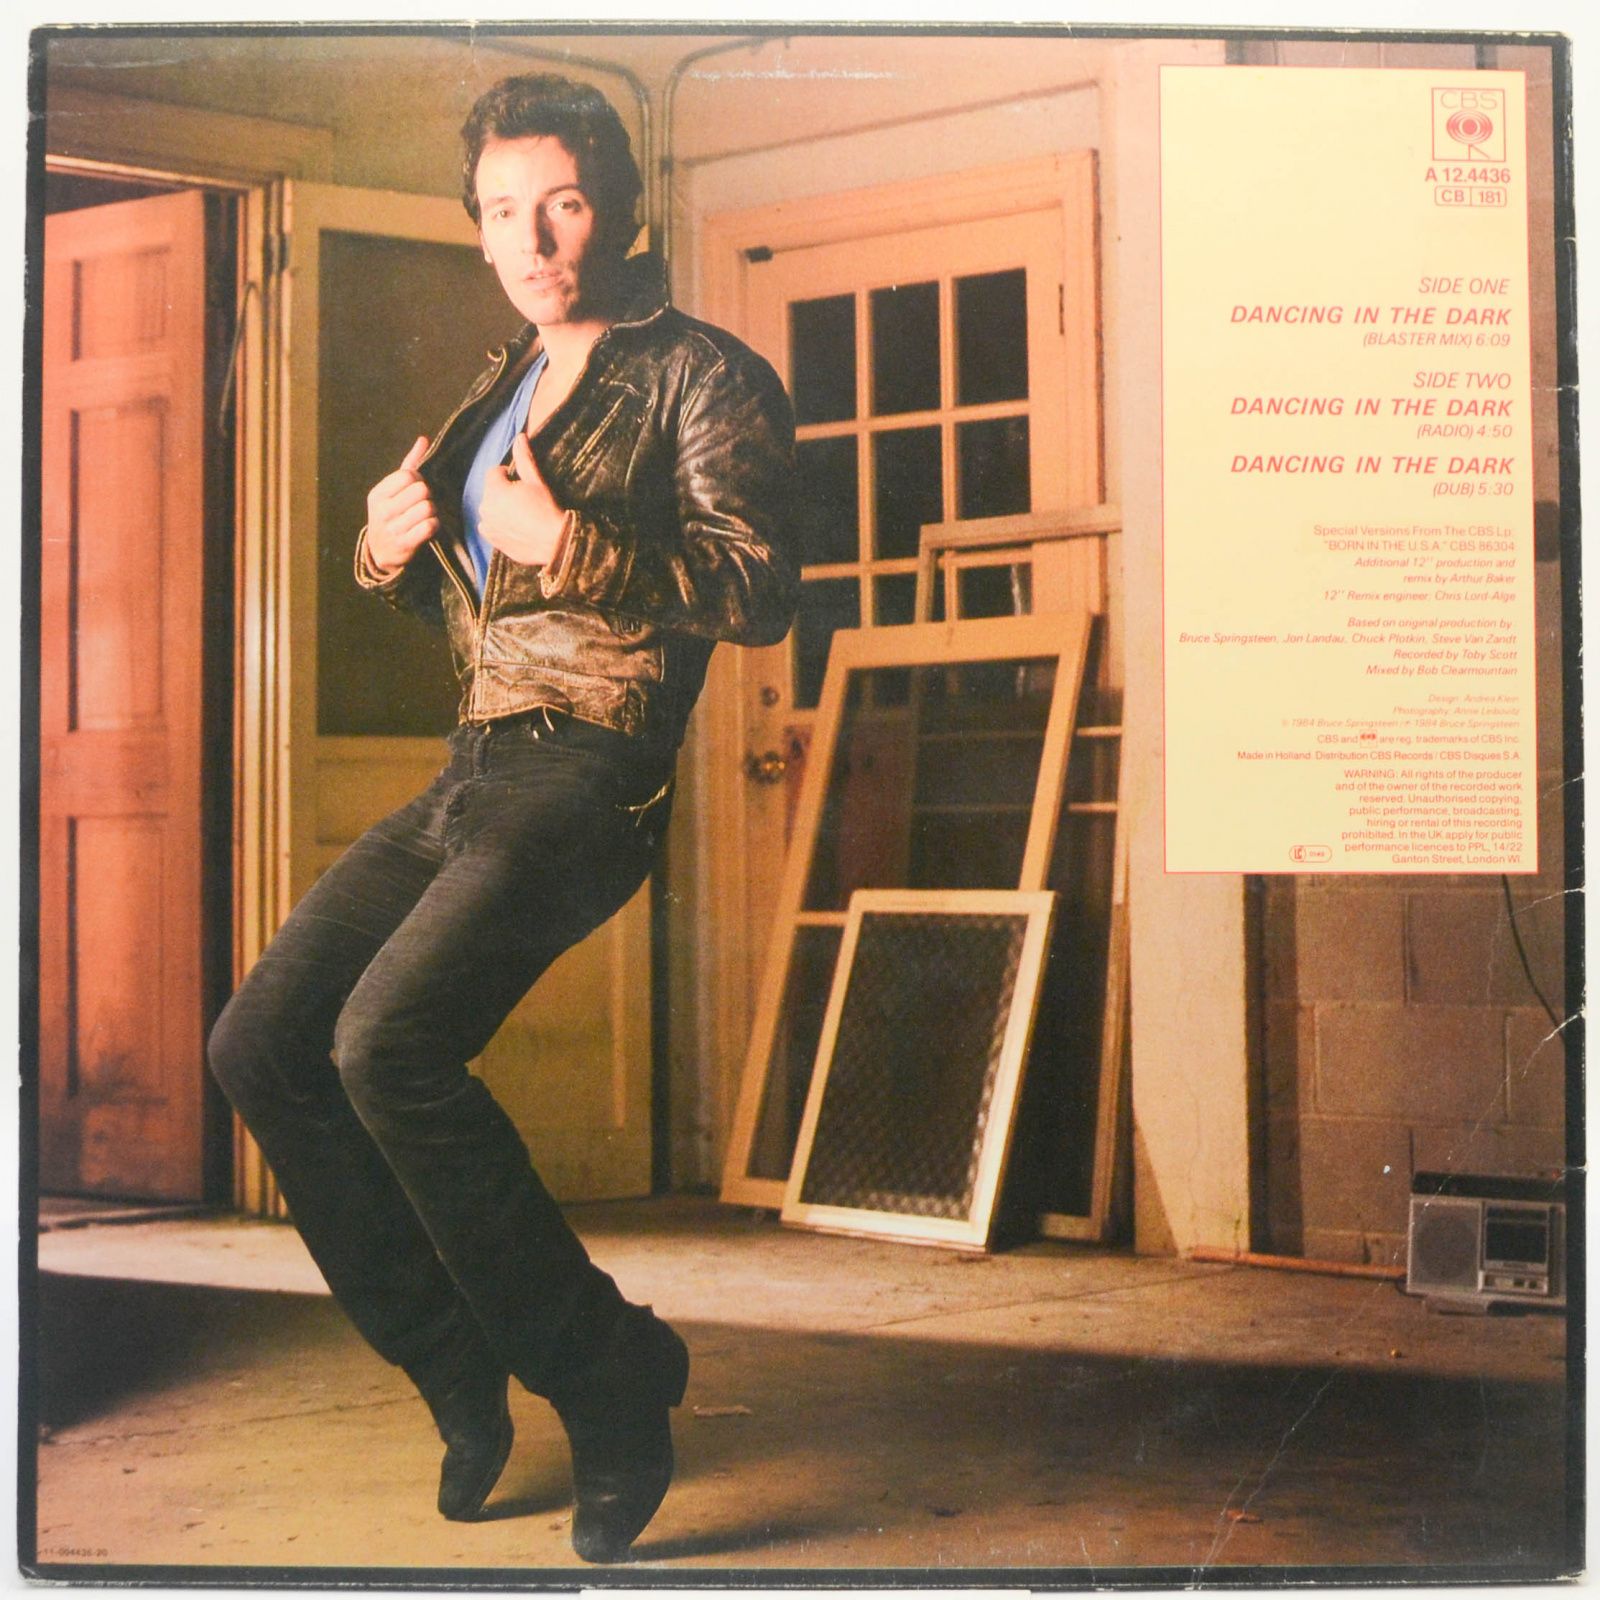 Bruce Springsteen — Dancing In The Dark, 1984